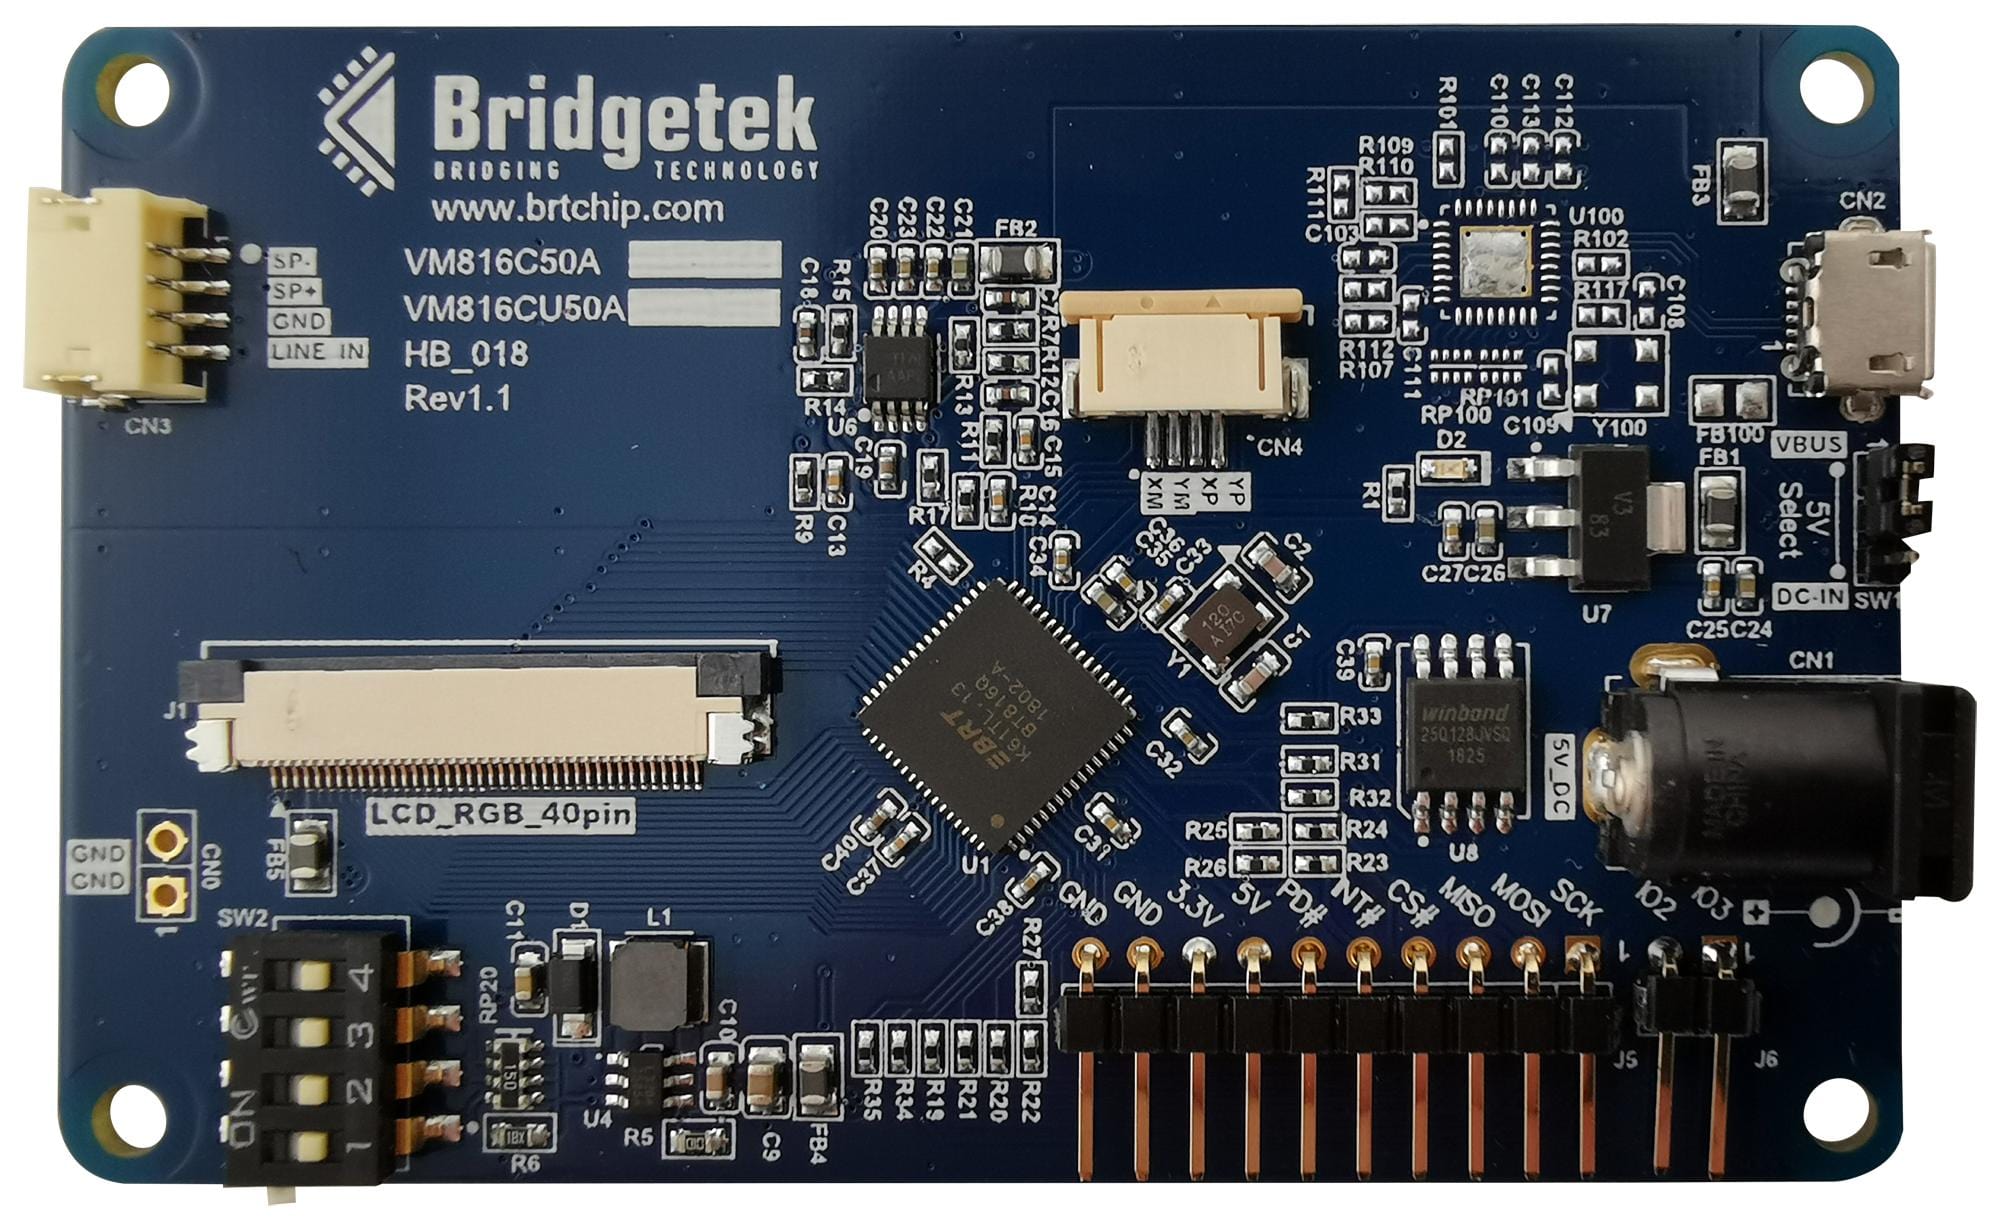 BRIDGETEK Audio / Video VM816C50A-N CREDIT CARD BOARD, EMBEDDED VIDEO ENGINE BRIDGETEK 2931597 VM816C50A-N